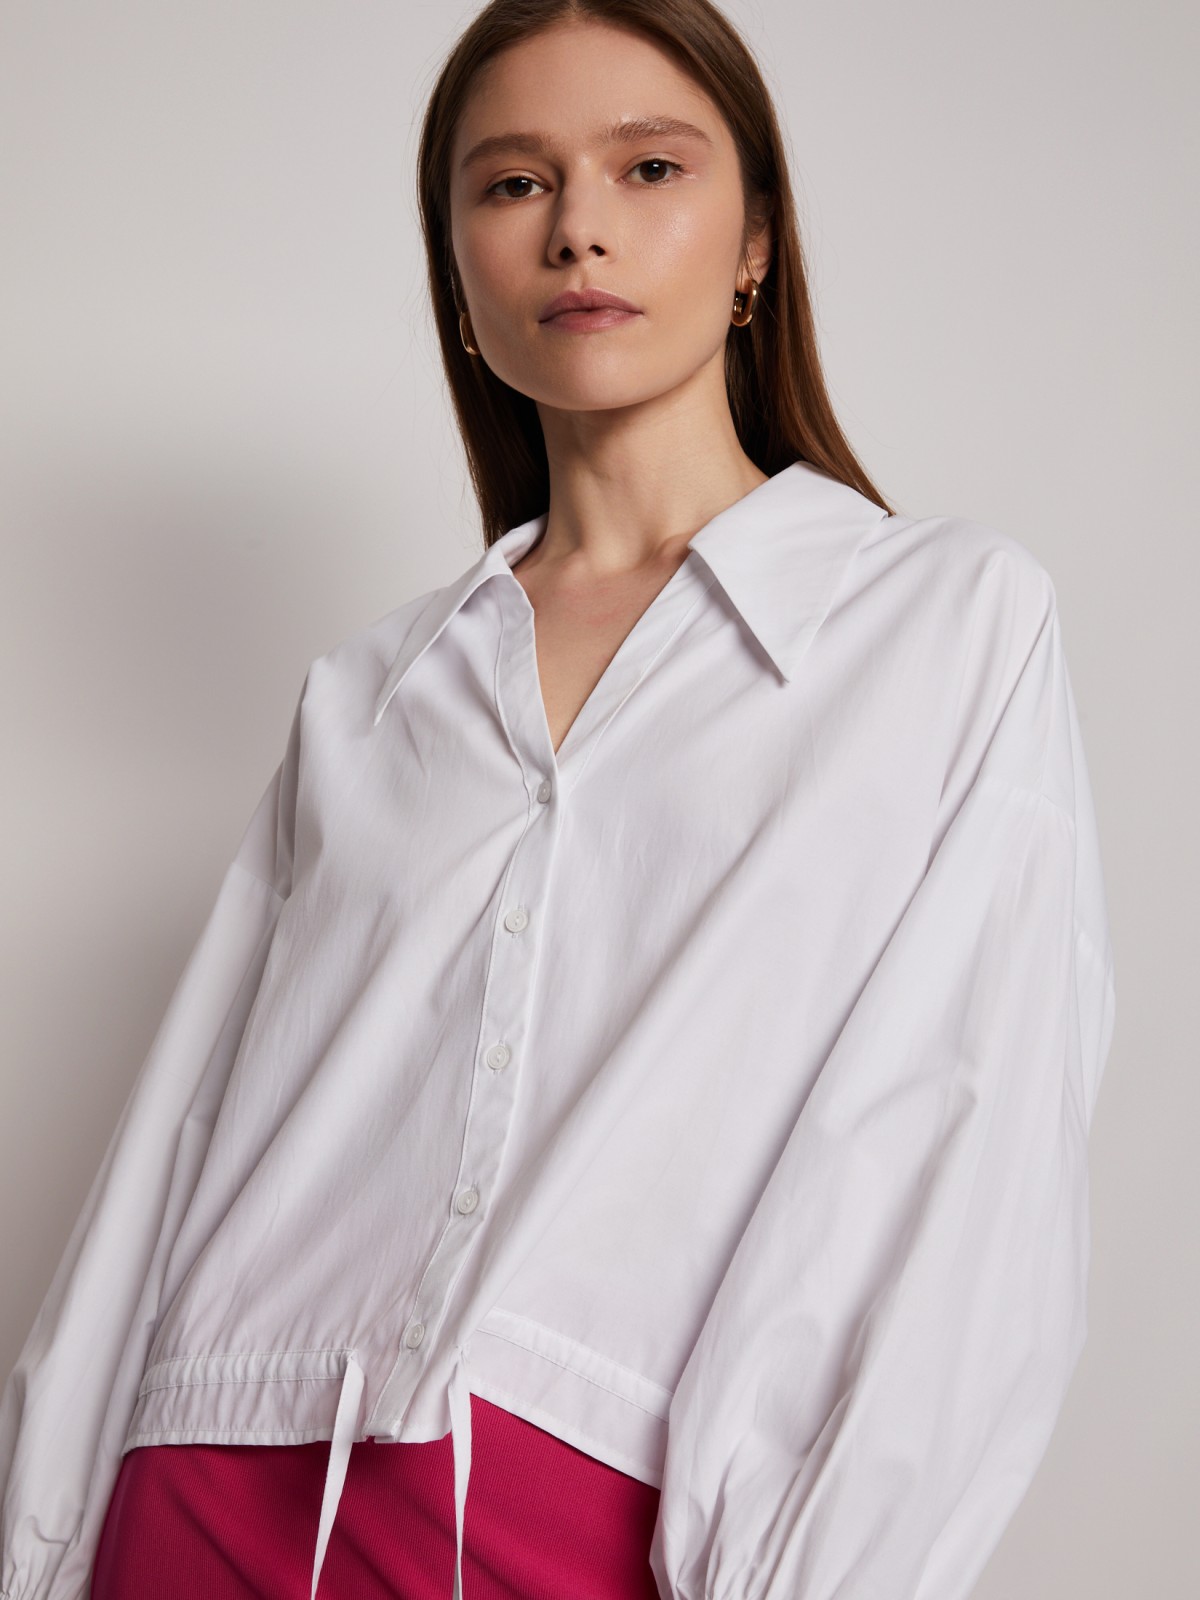 Блузка-рубашка на кулиске с длинным рукавом